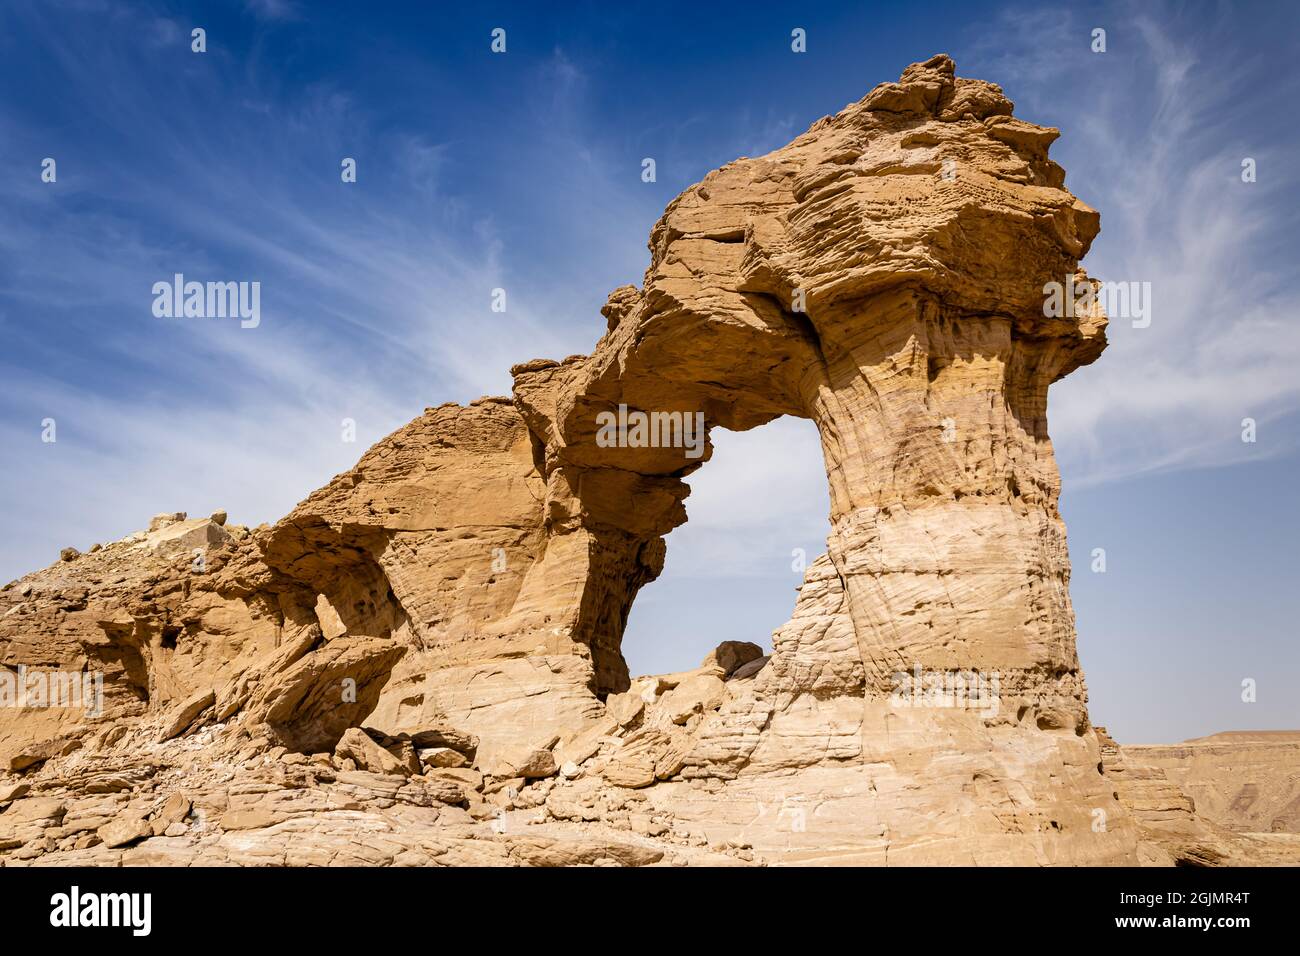 The Natural Arch of Riyadh, Saudi Arabia Stock Photo